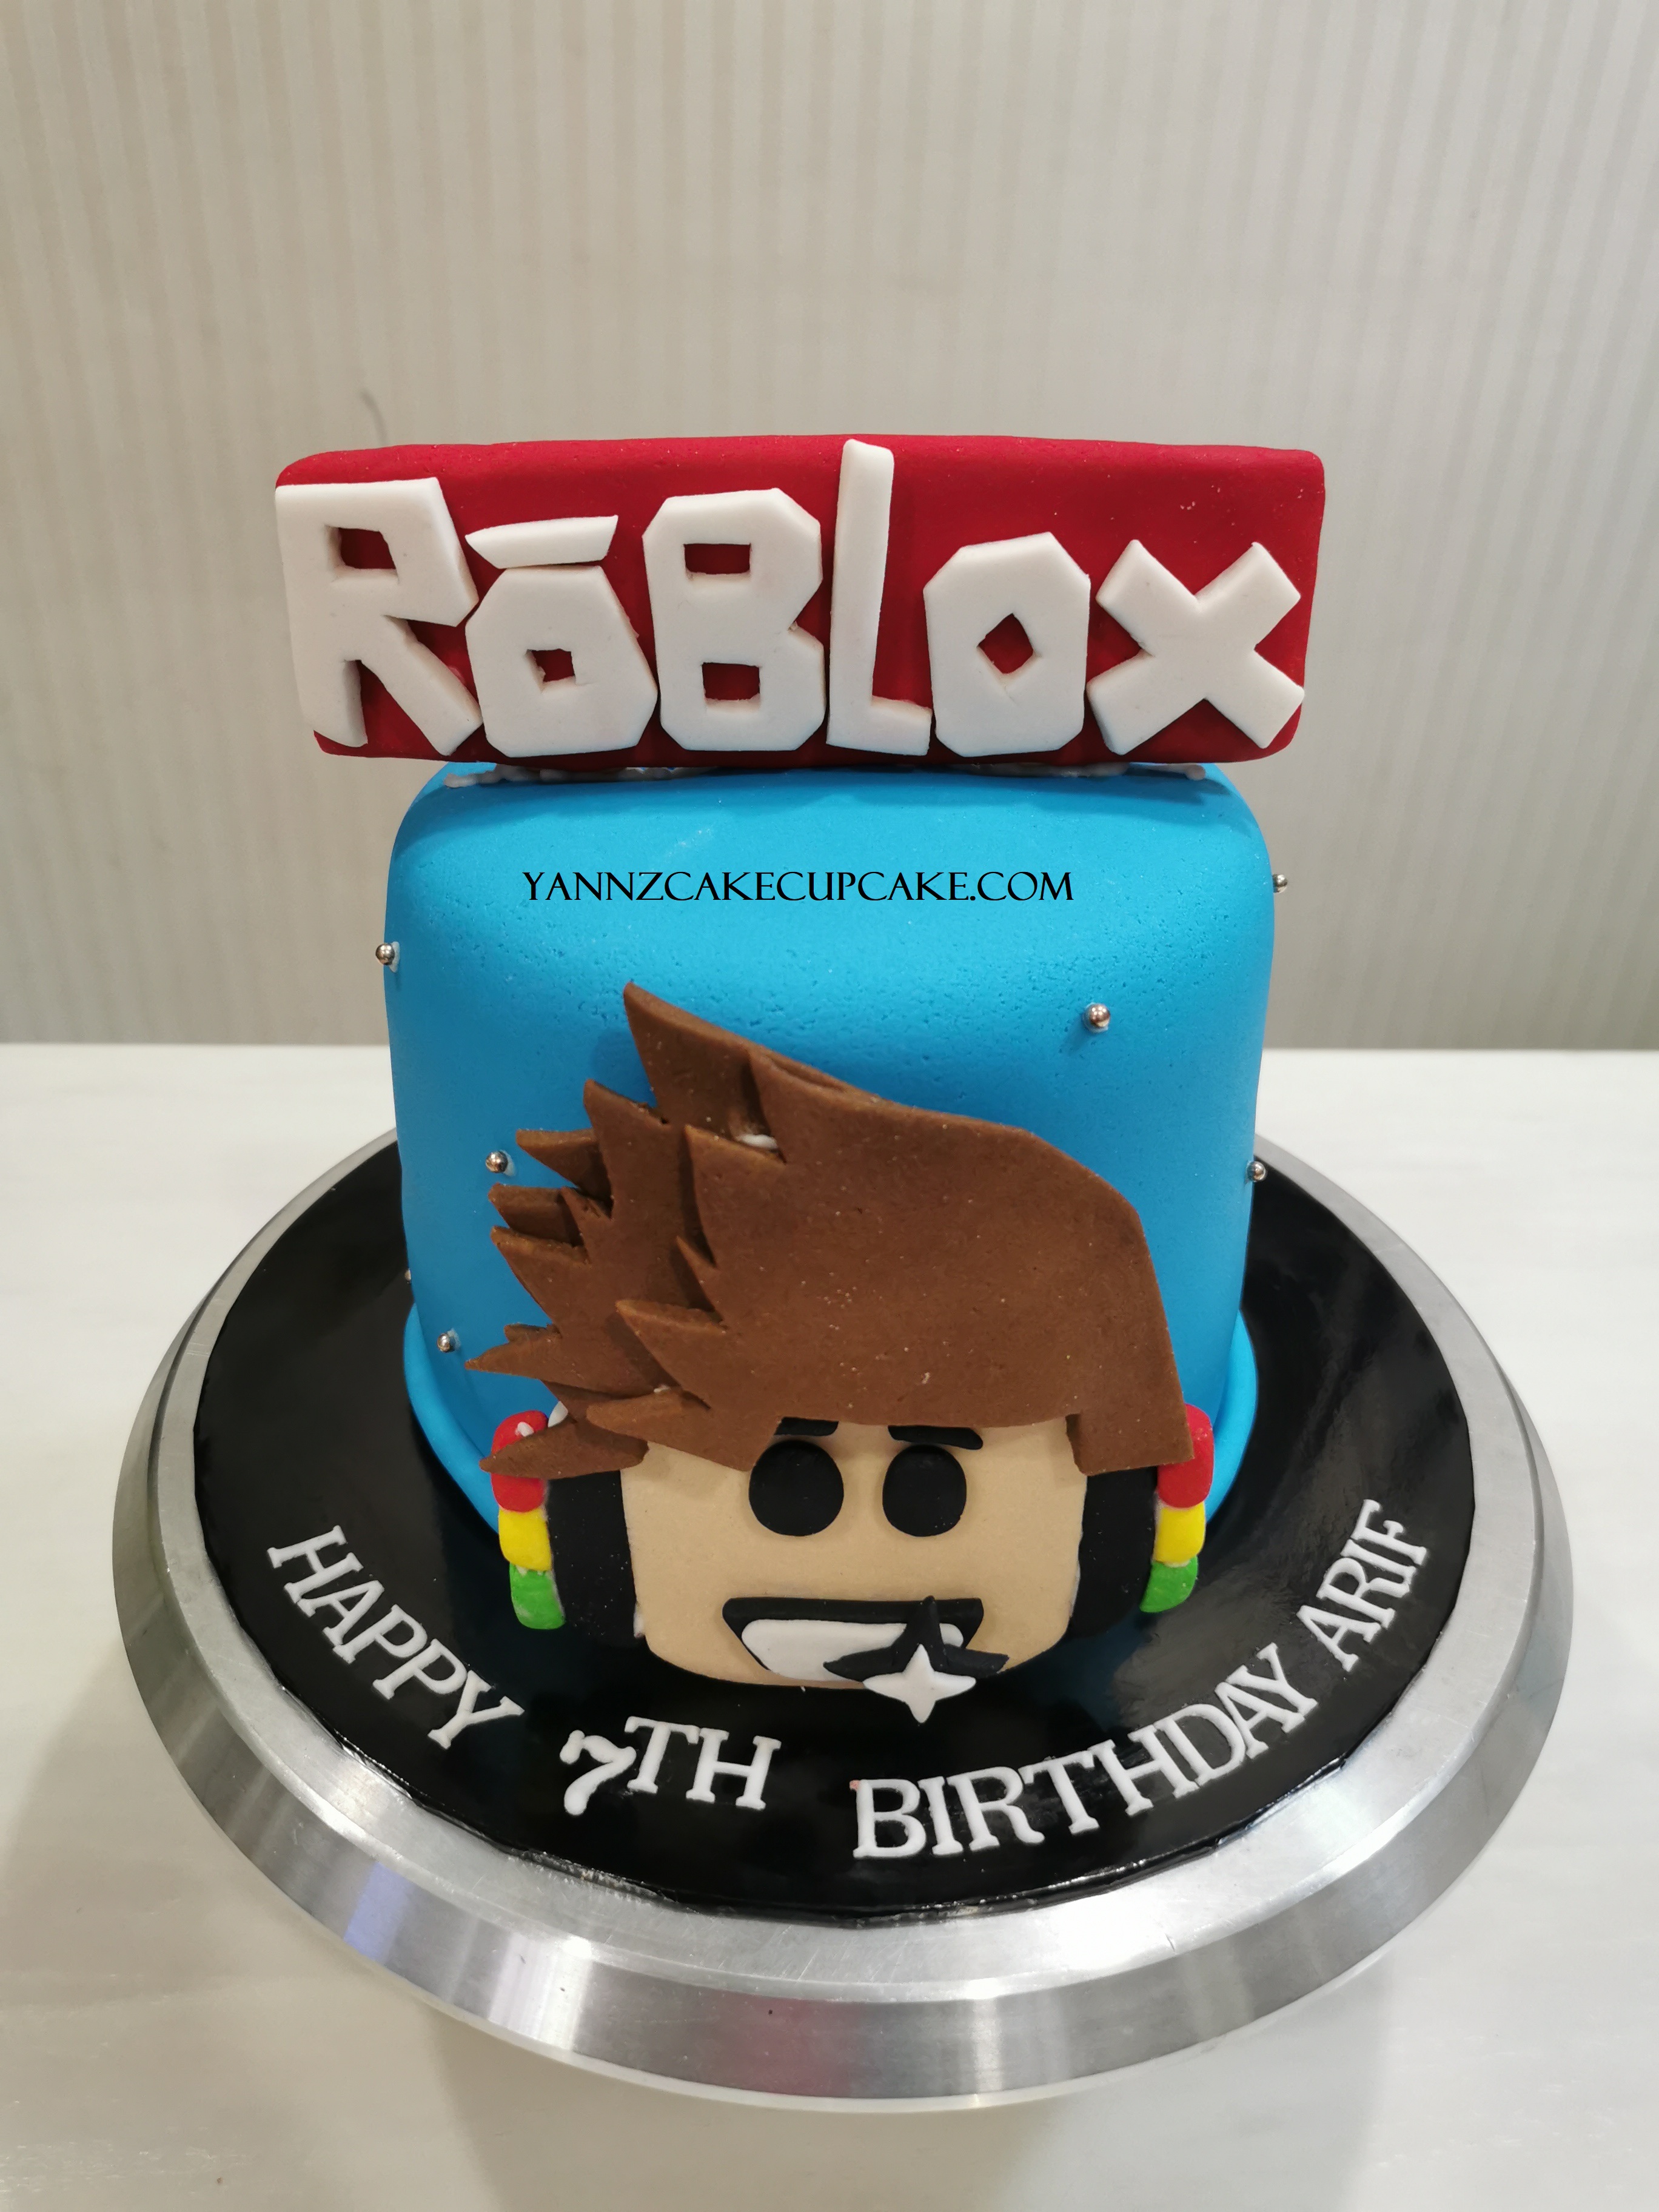 Theme Roblox Yannzcakecupcakecom - roblox cake for mikhail yannzcakecupcakecom